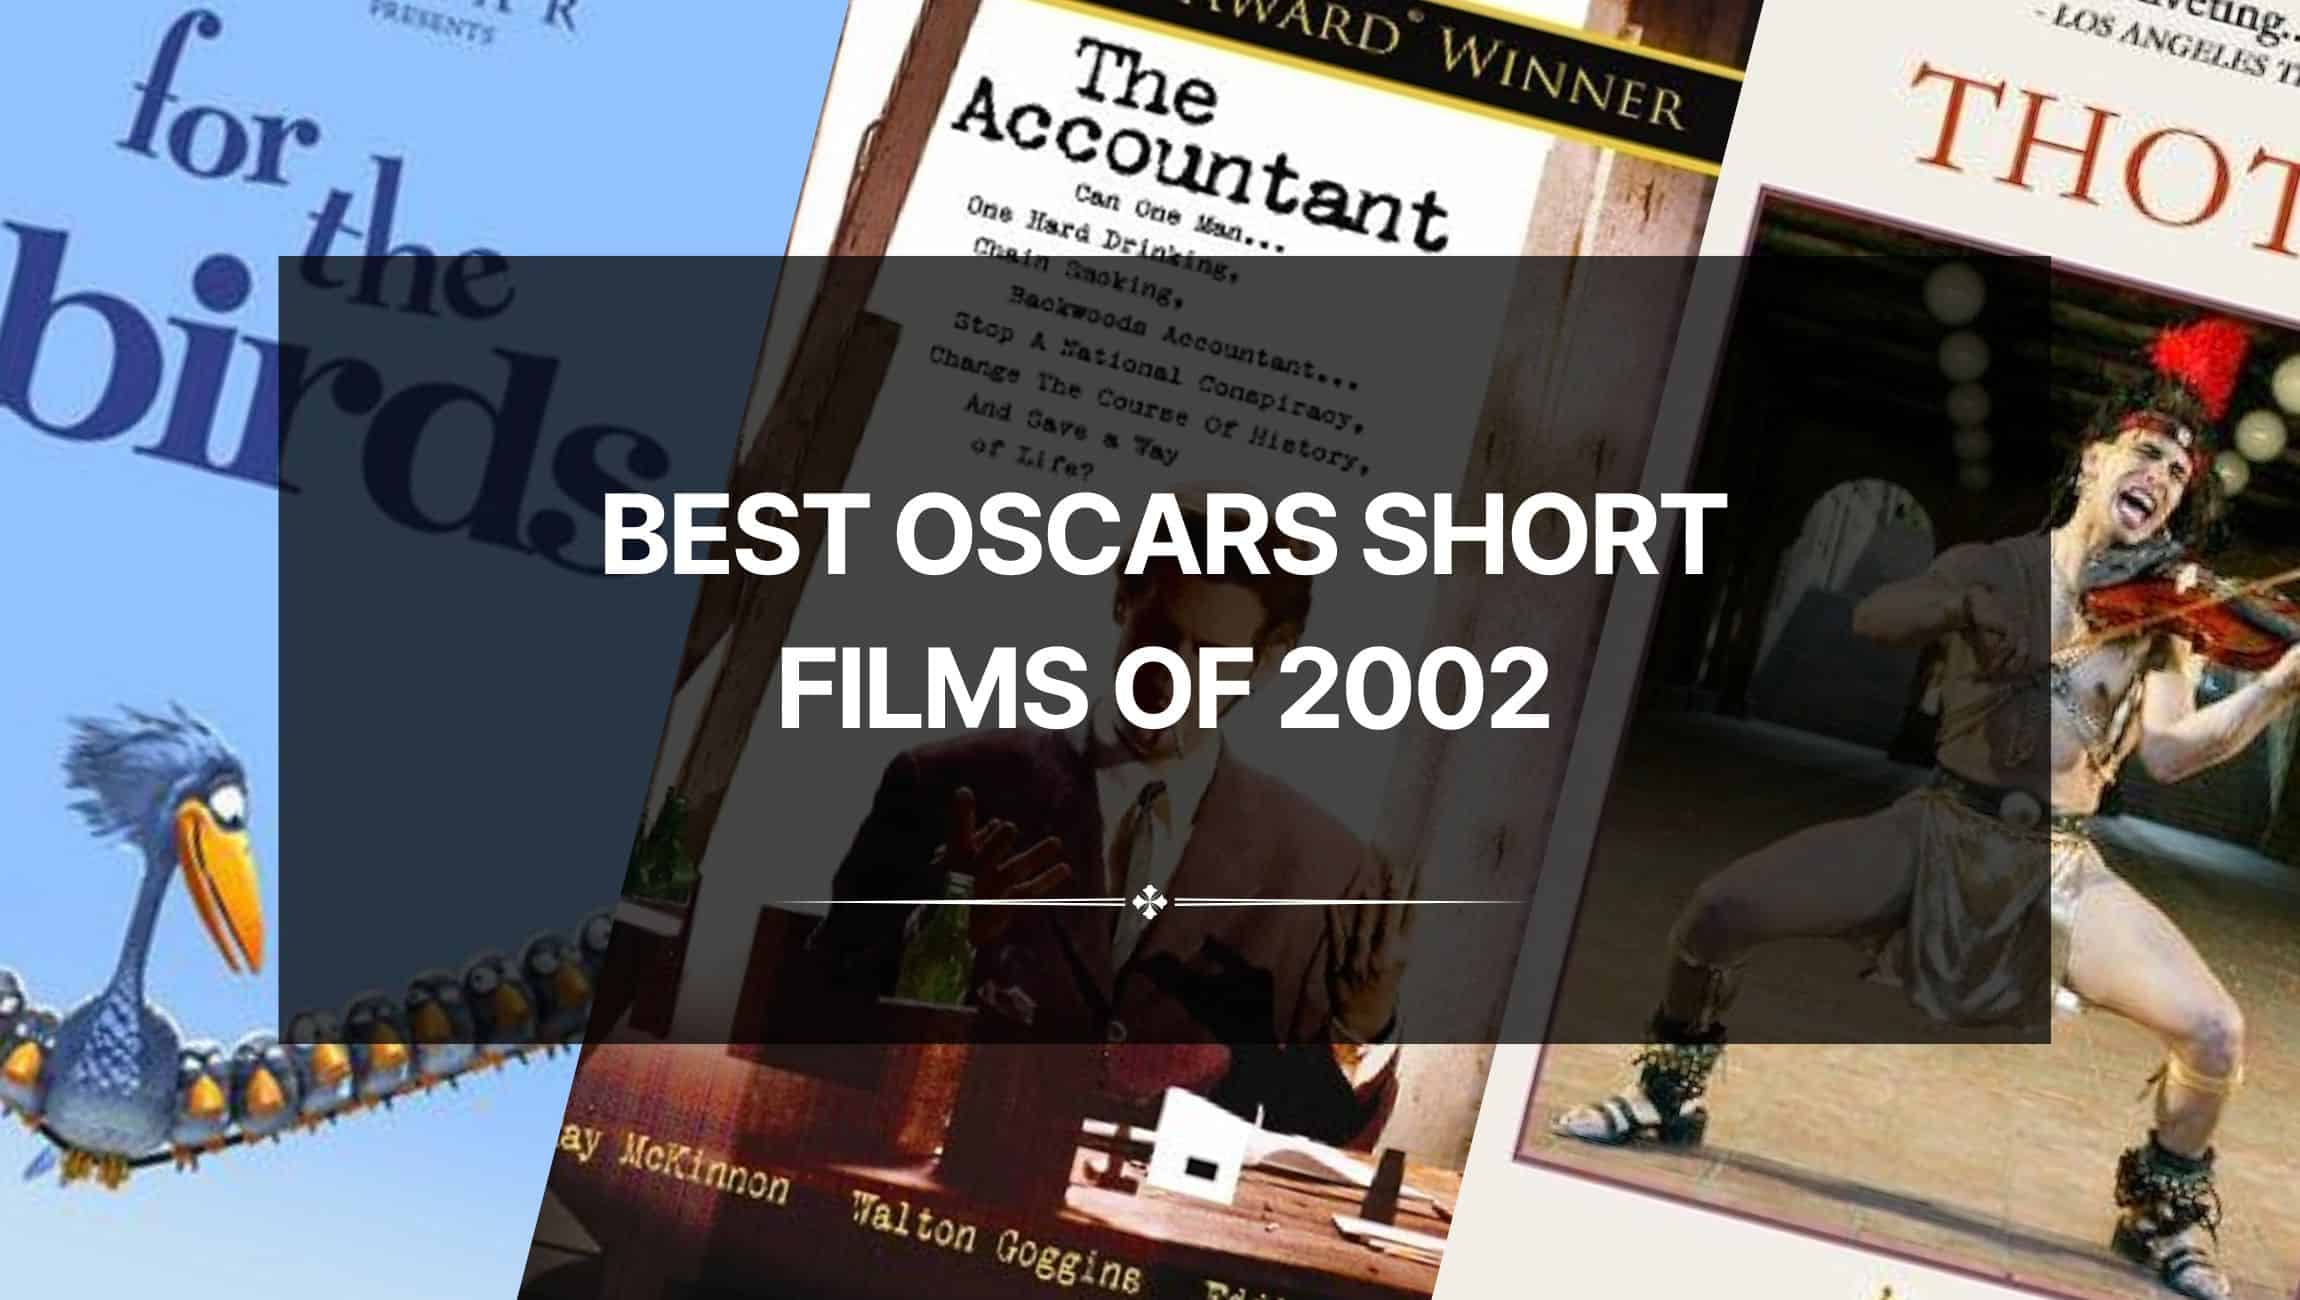 Best Oscars Short Films of 2002